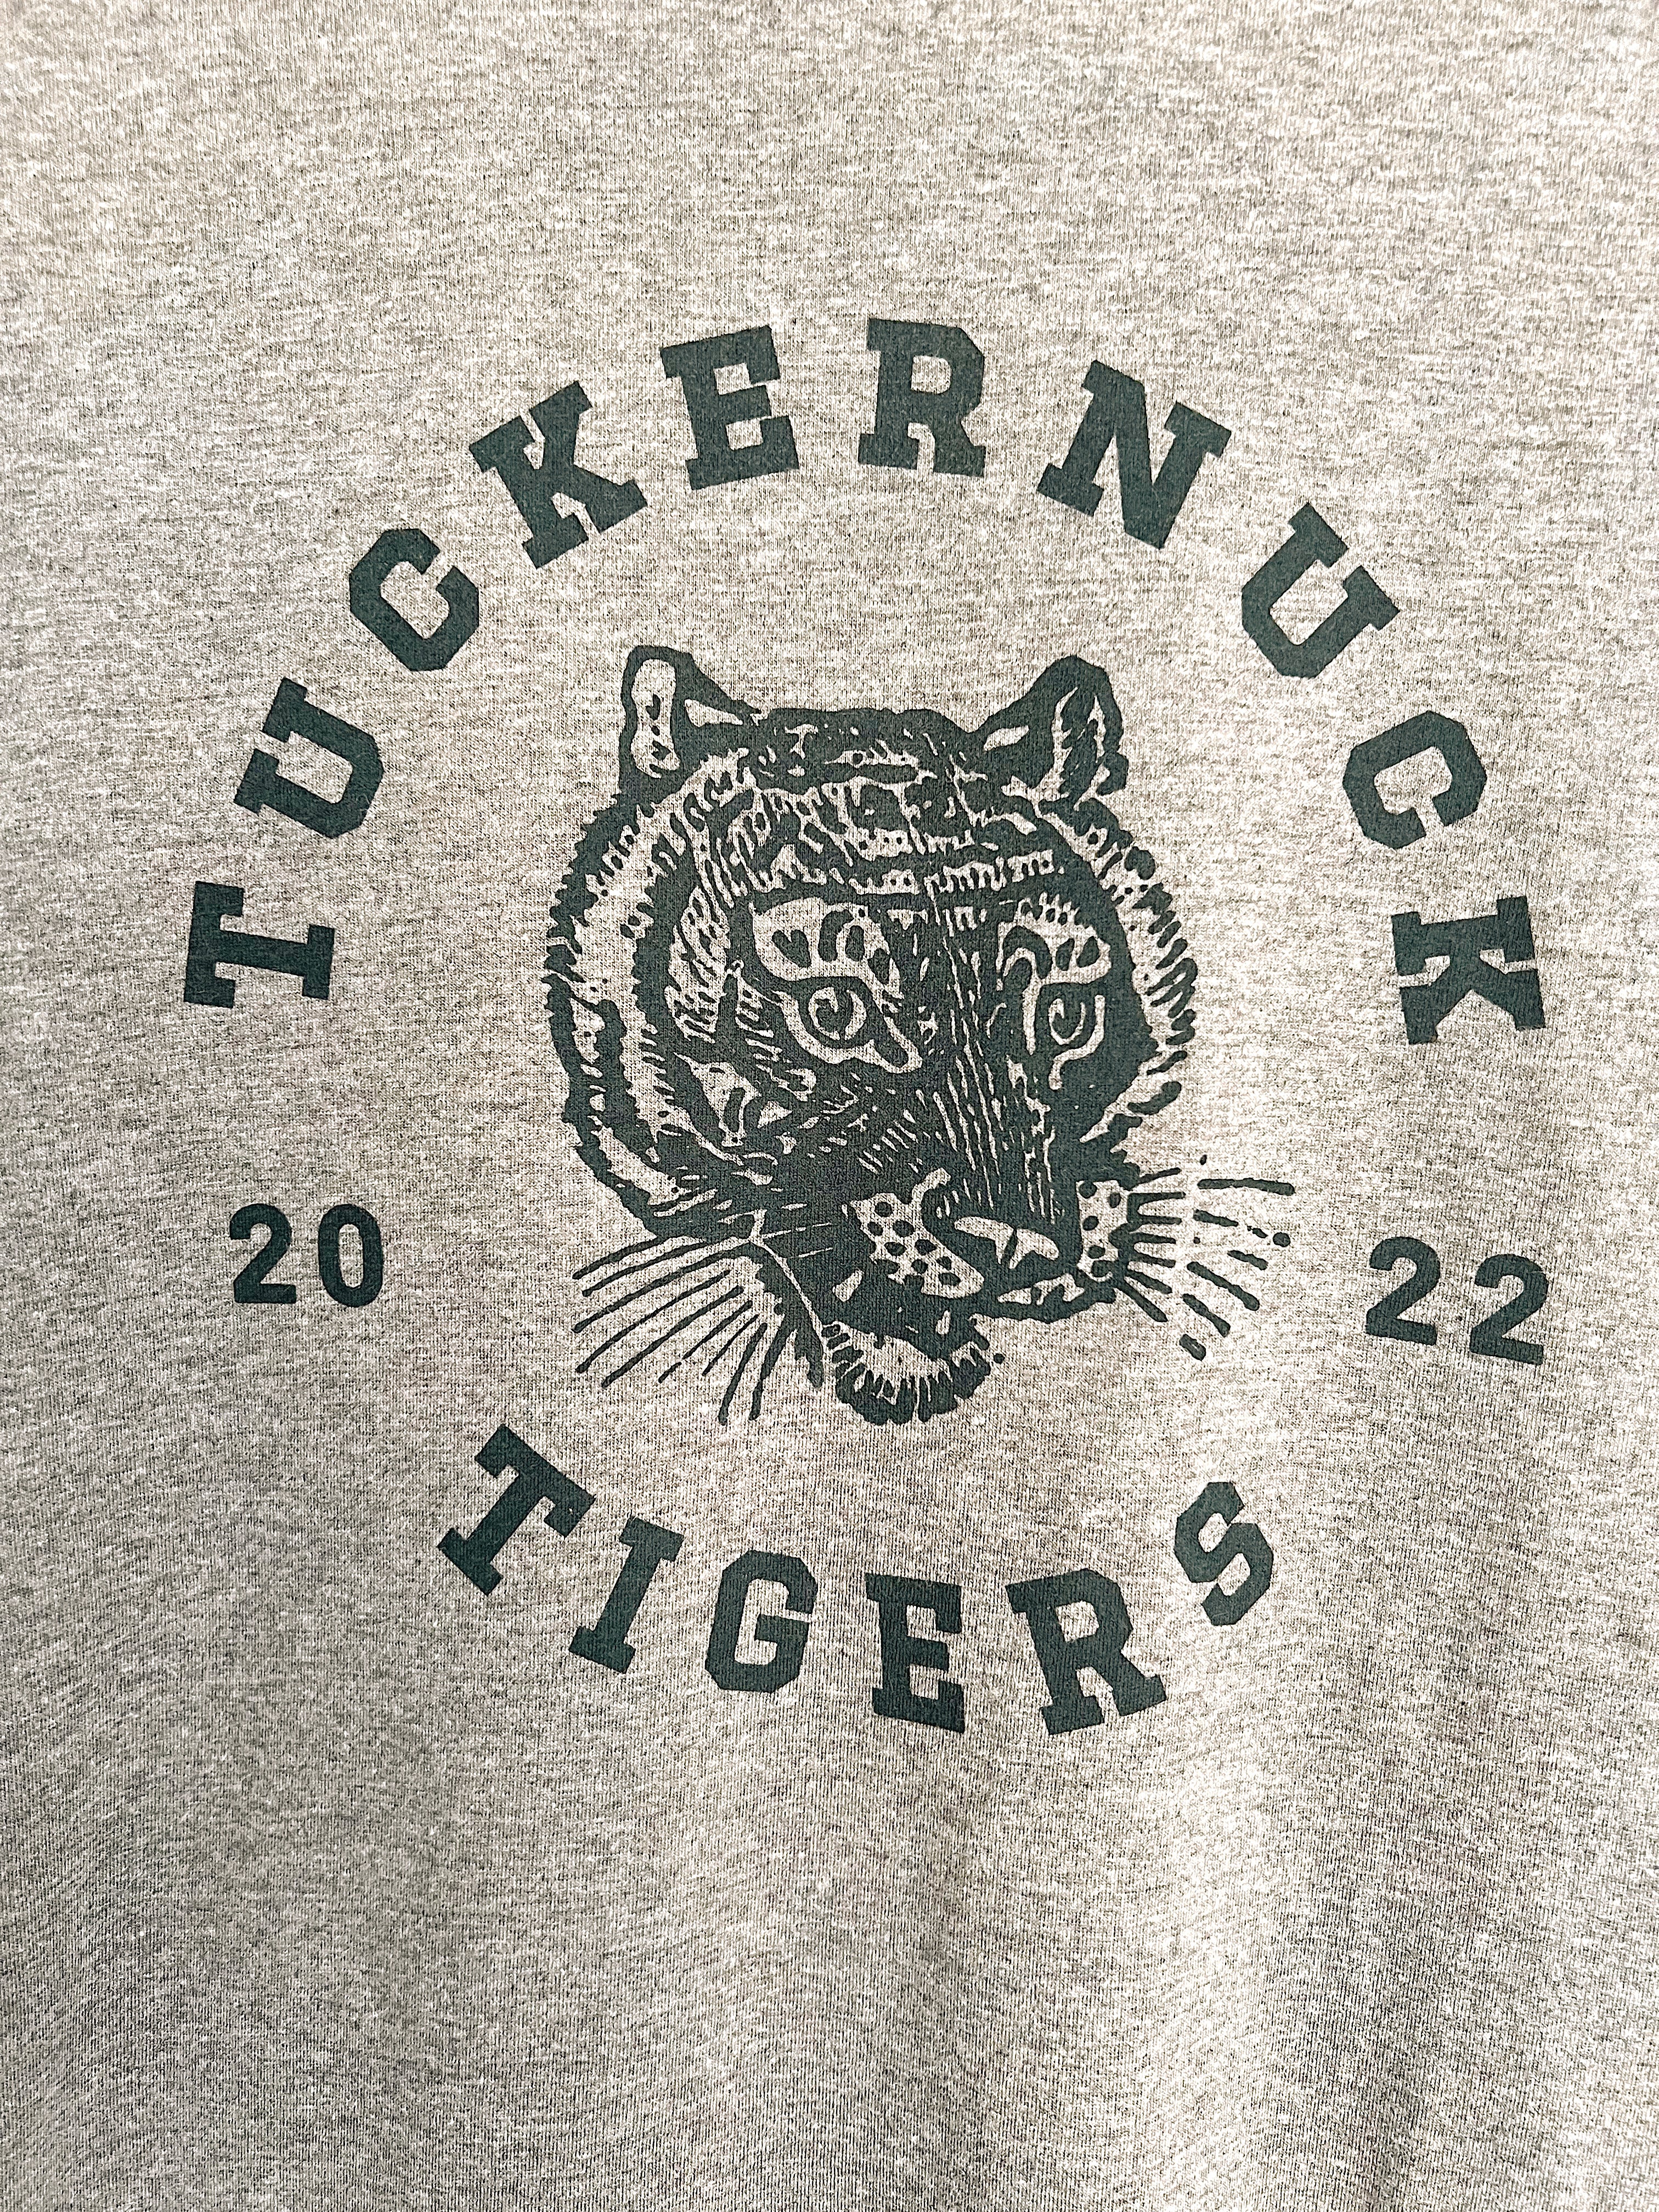 Tuckernuck Tigers T-shirt